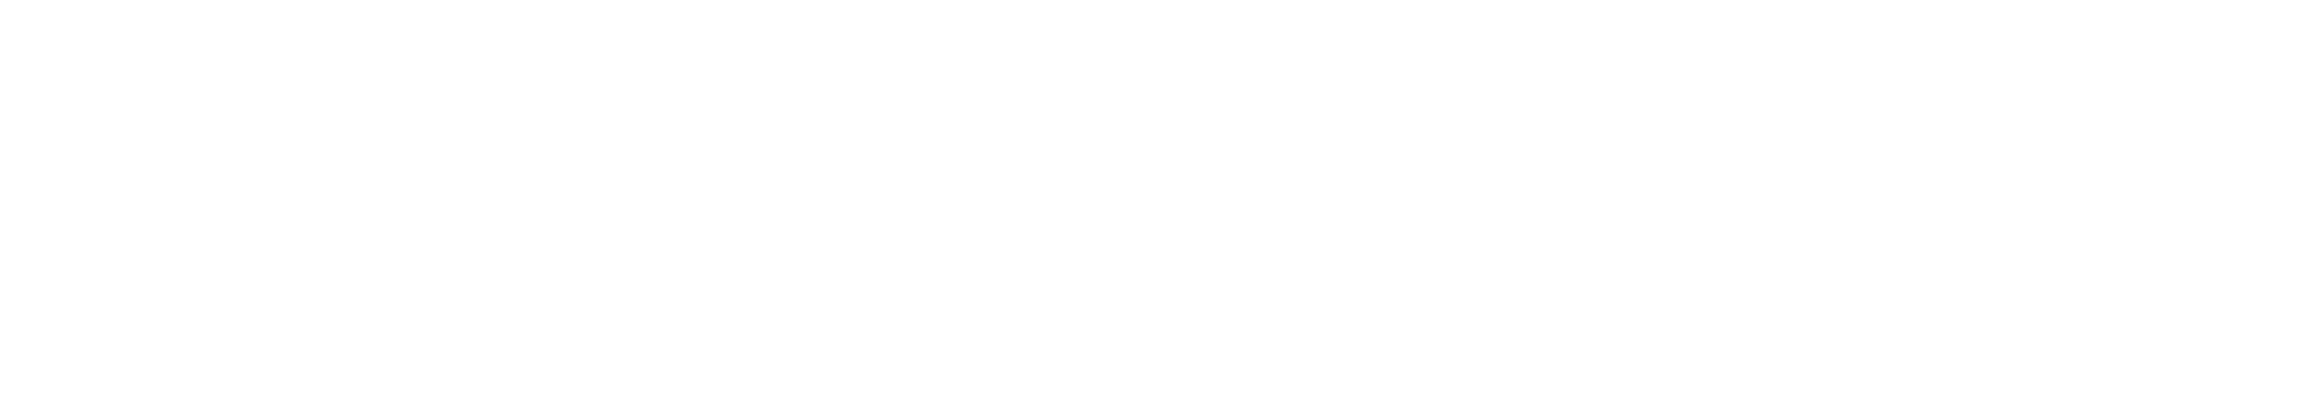 Harbor Group Management logo for Bexley Plaza